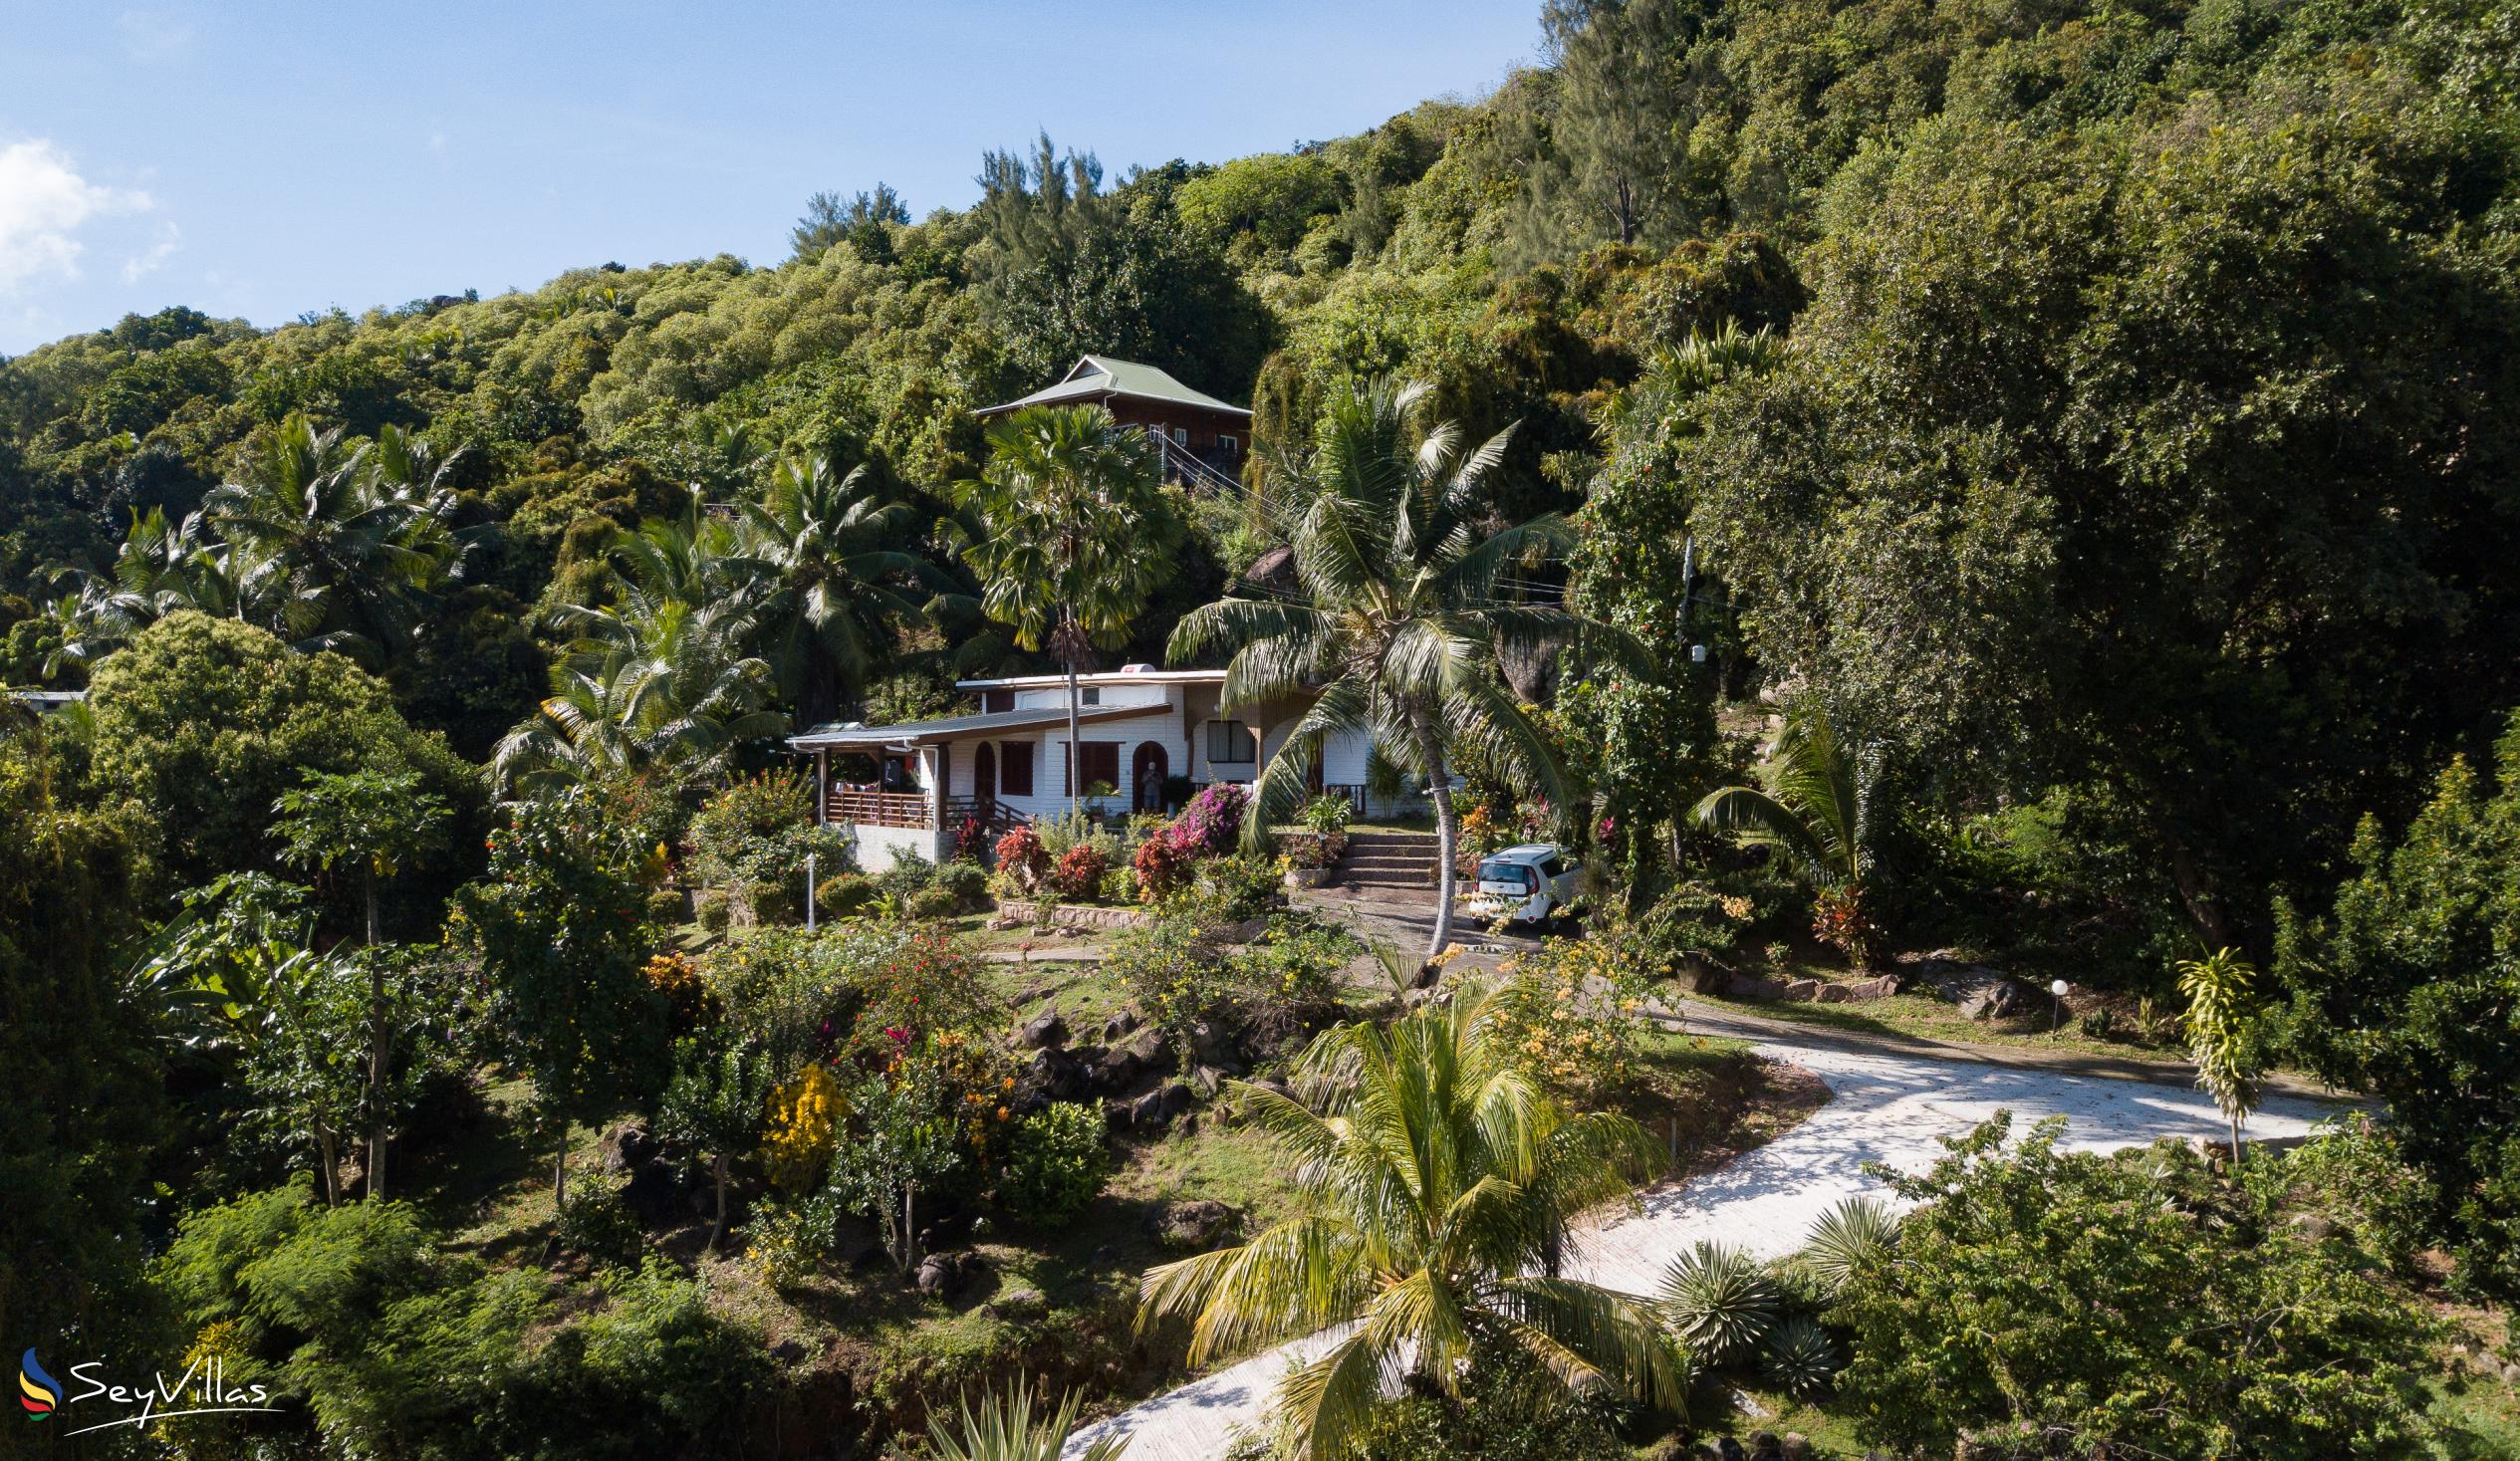 Foto 3: Le Grand Bleu Villas - Aussenbereich - Praslin (Seychellen)